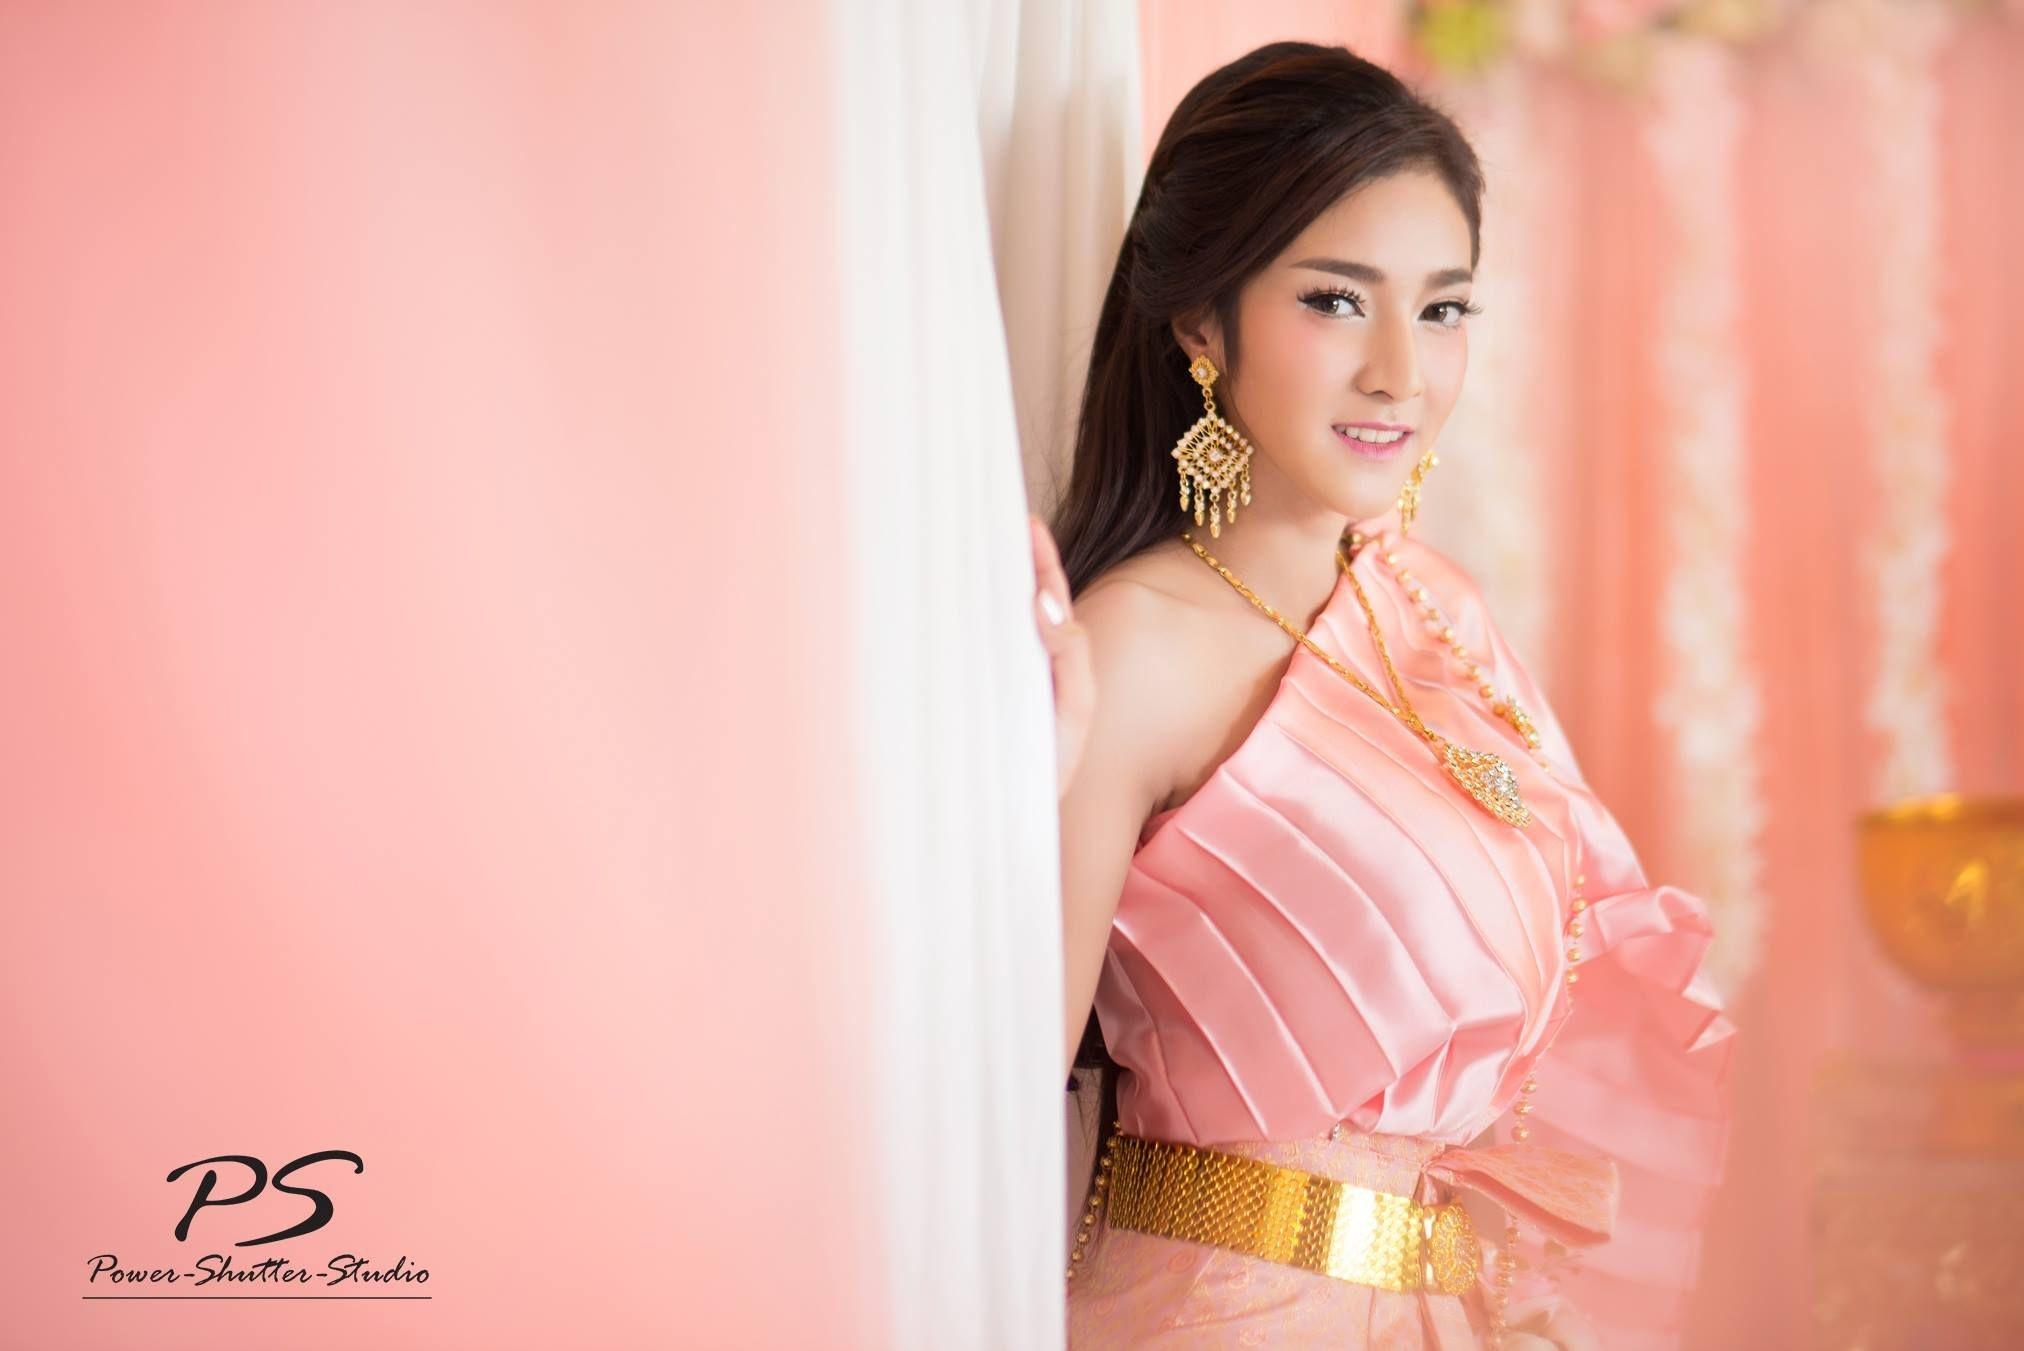 Download 2024x1351 Koko Rosjares, Thai Model, Smiling, Earring, Pink